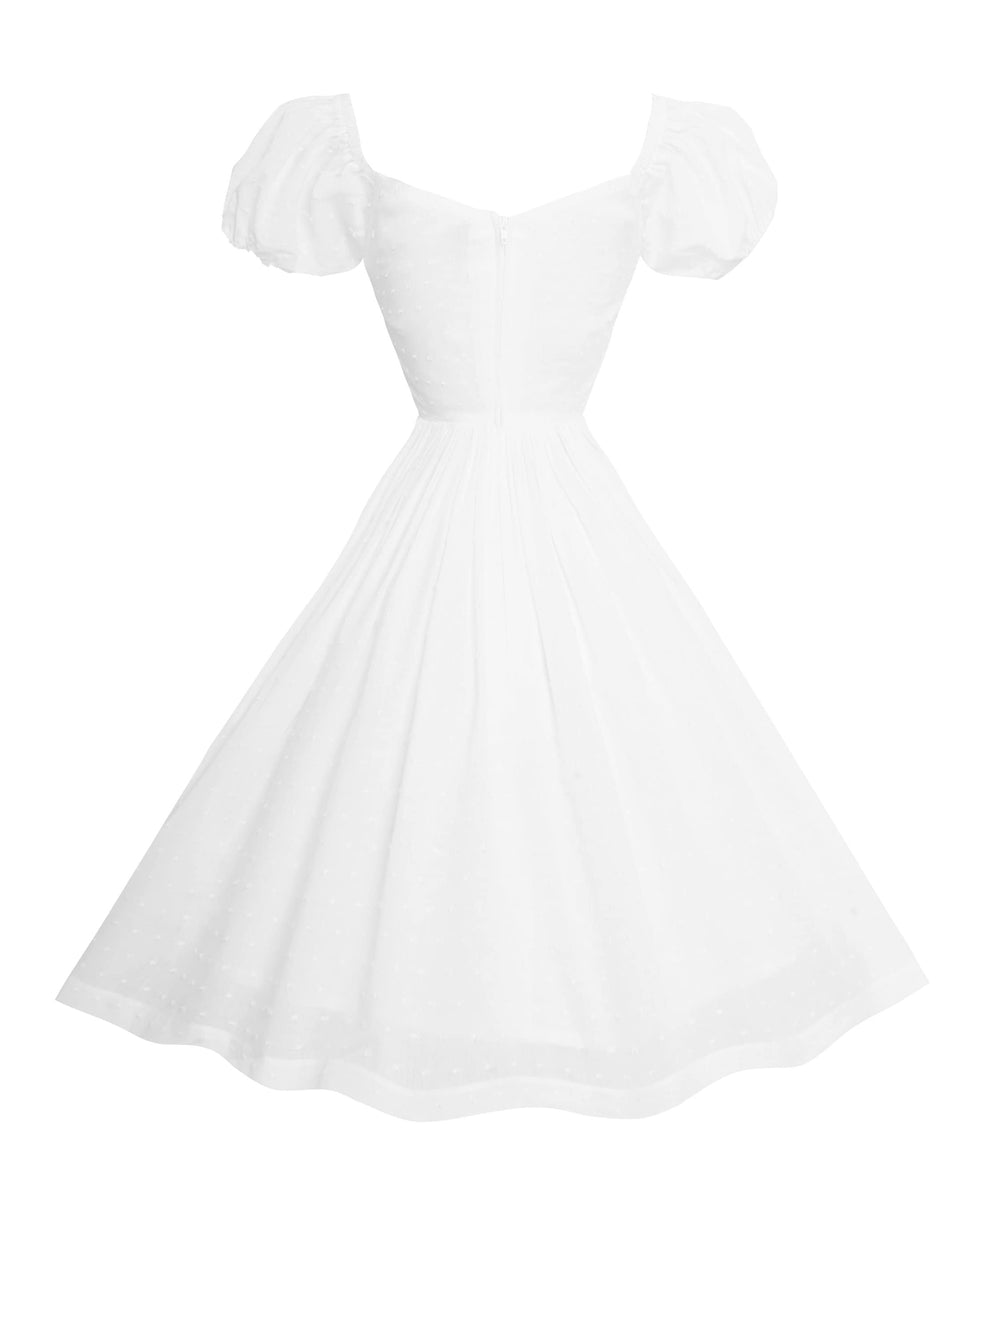 MTO - Dottie Dress White "Dotted Swiss"